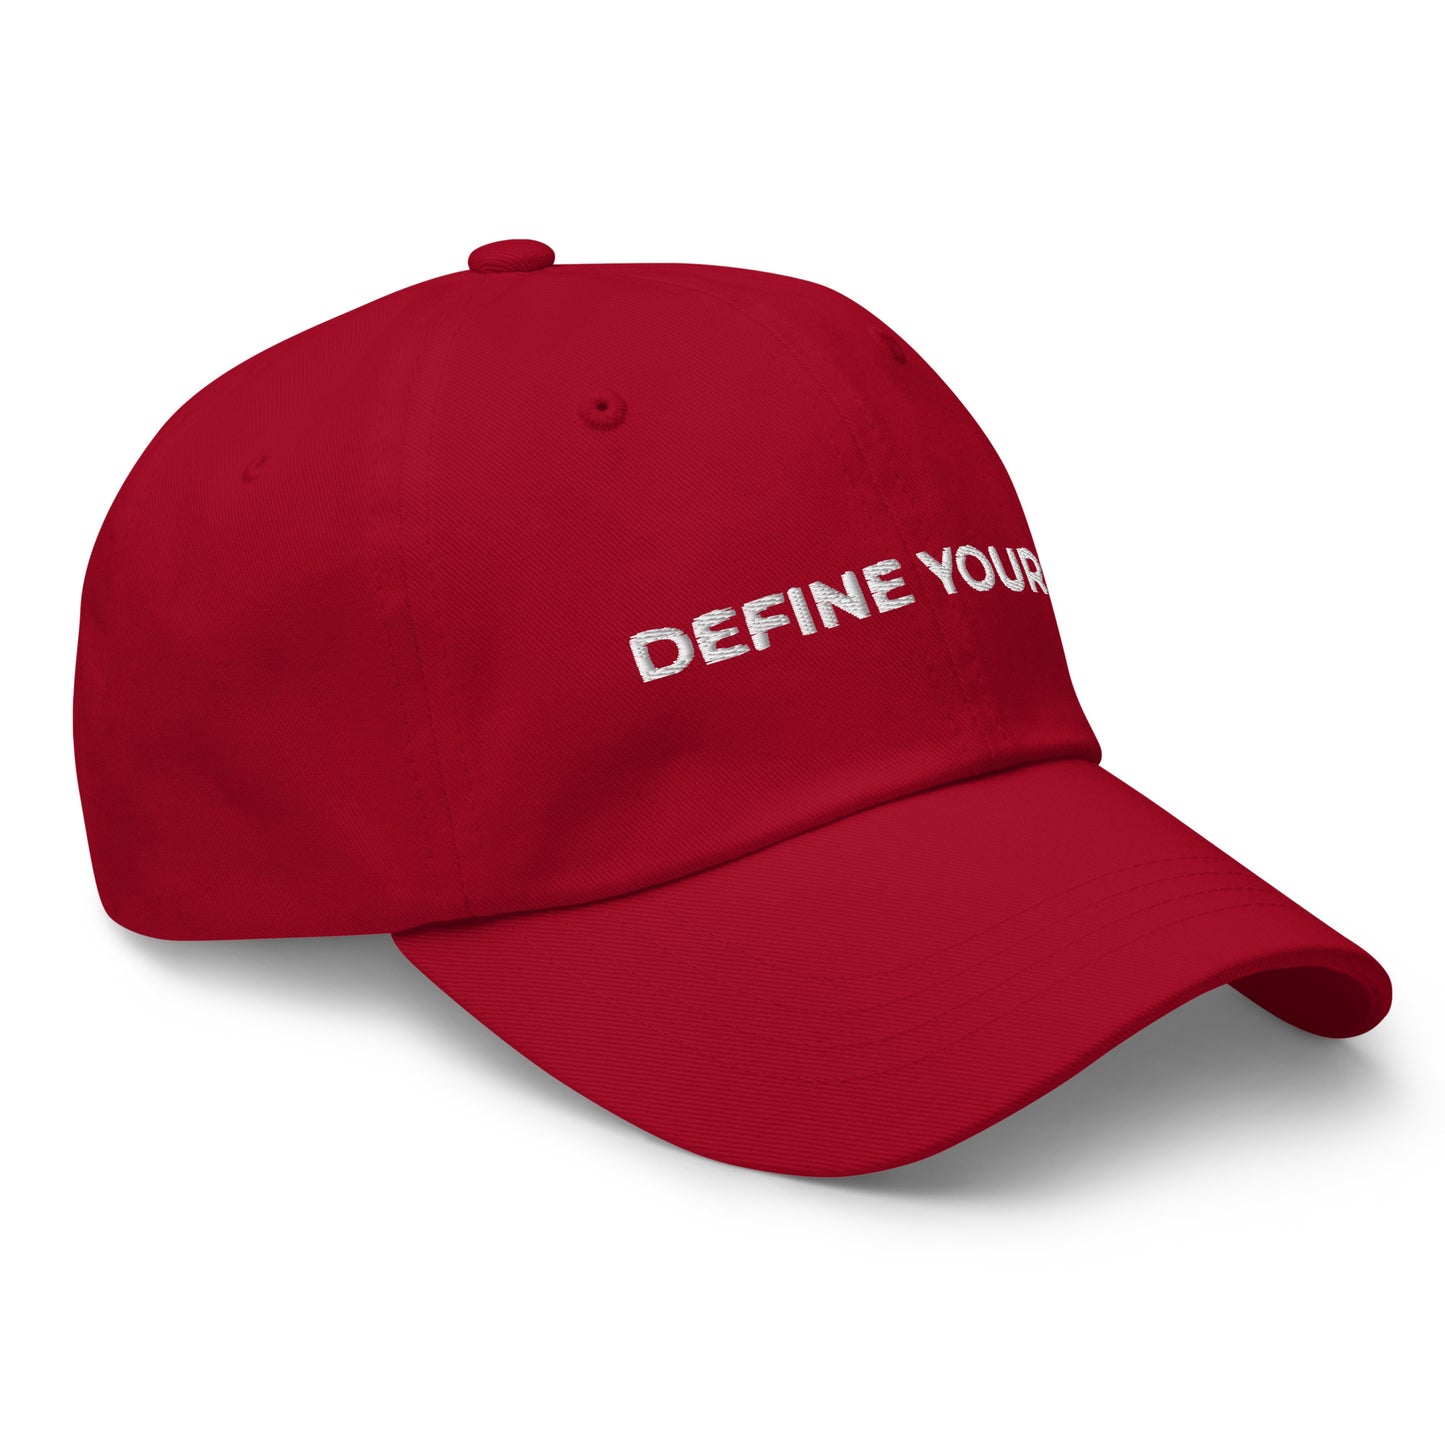 Define Yours Dad Hat